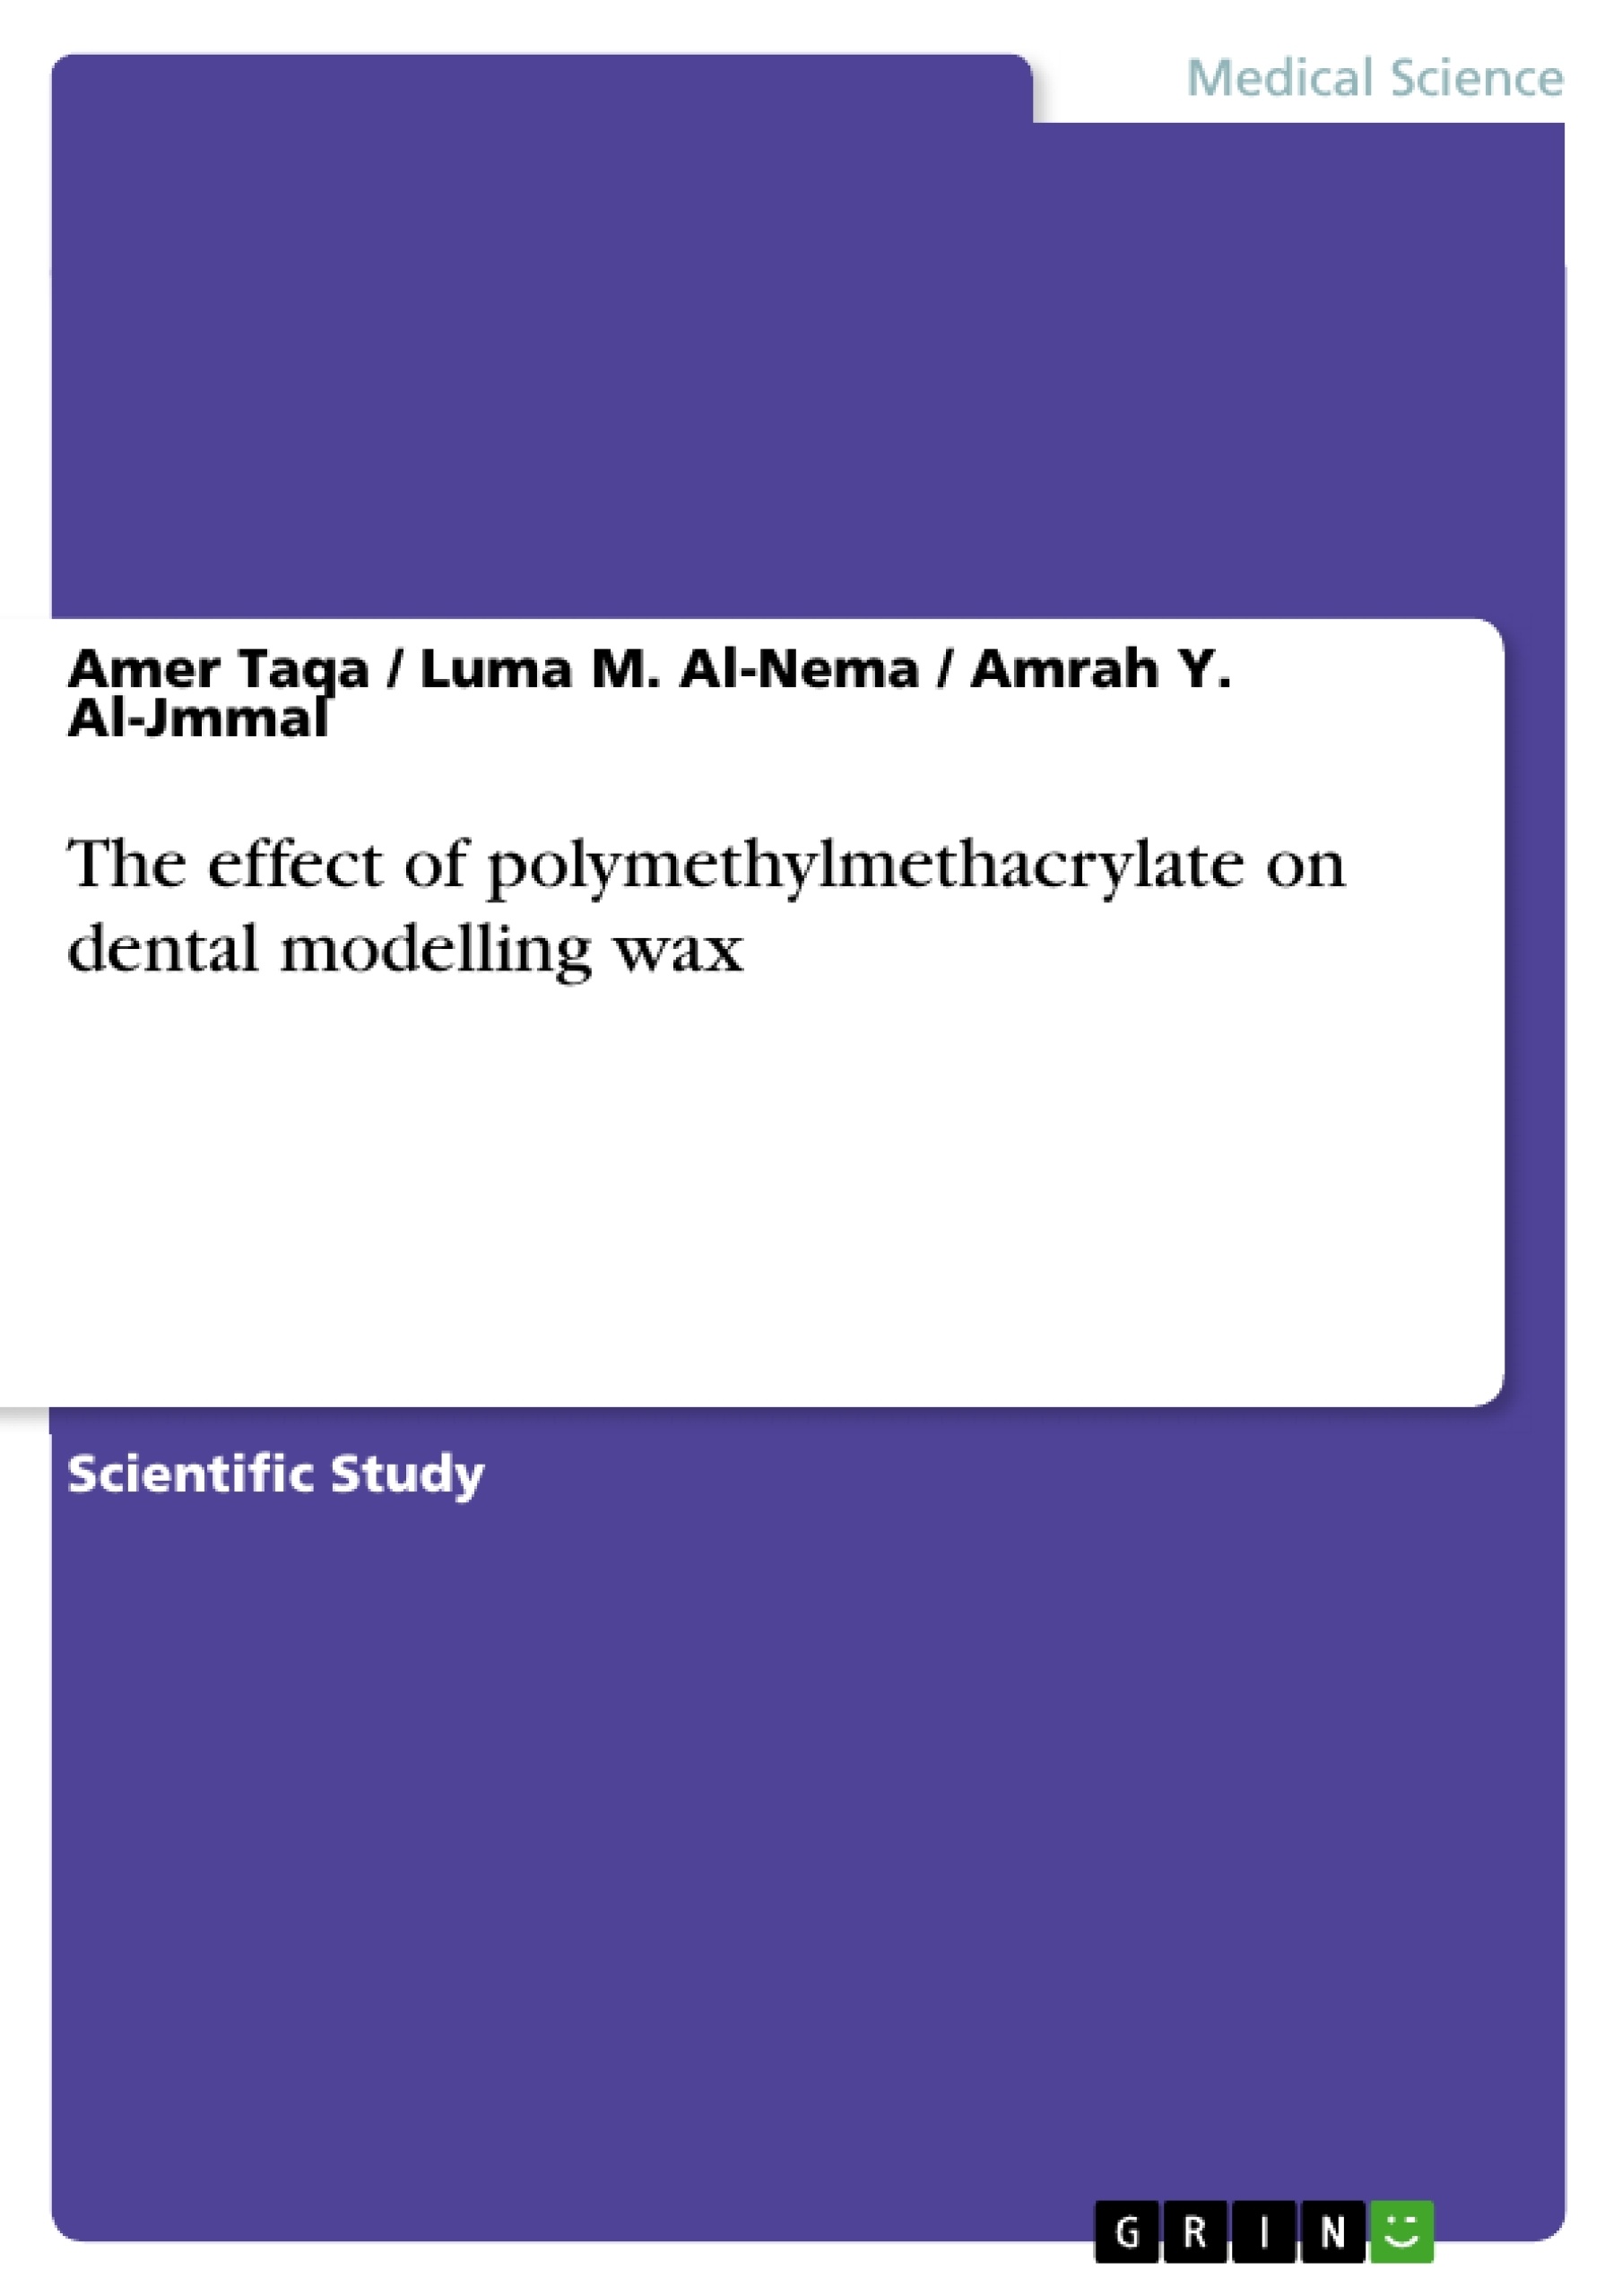 Title: The effect of polymethylmethacrylate on dental modelling wax